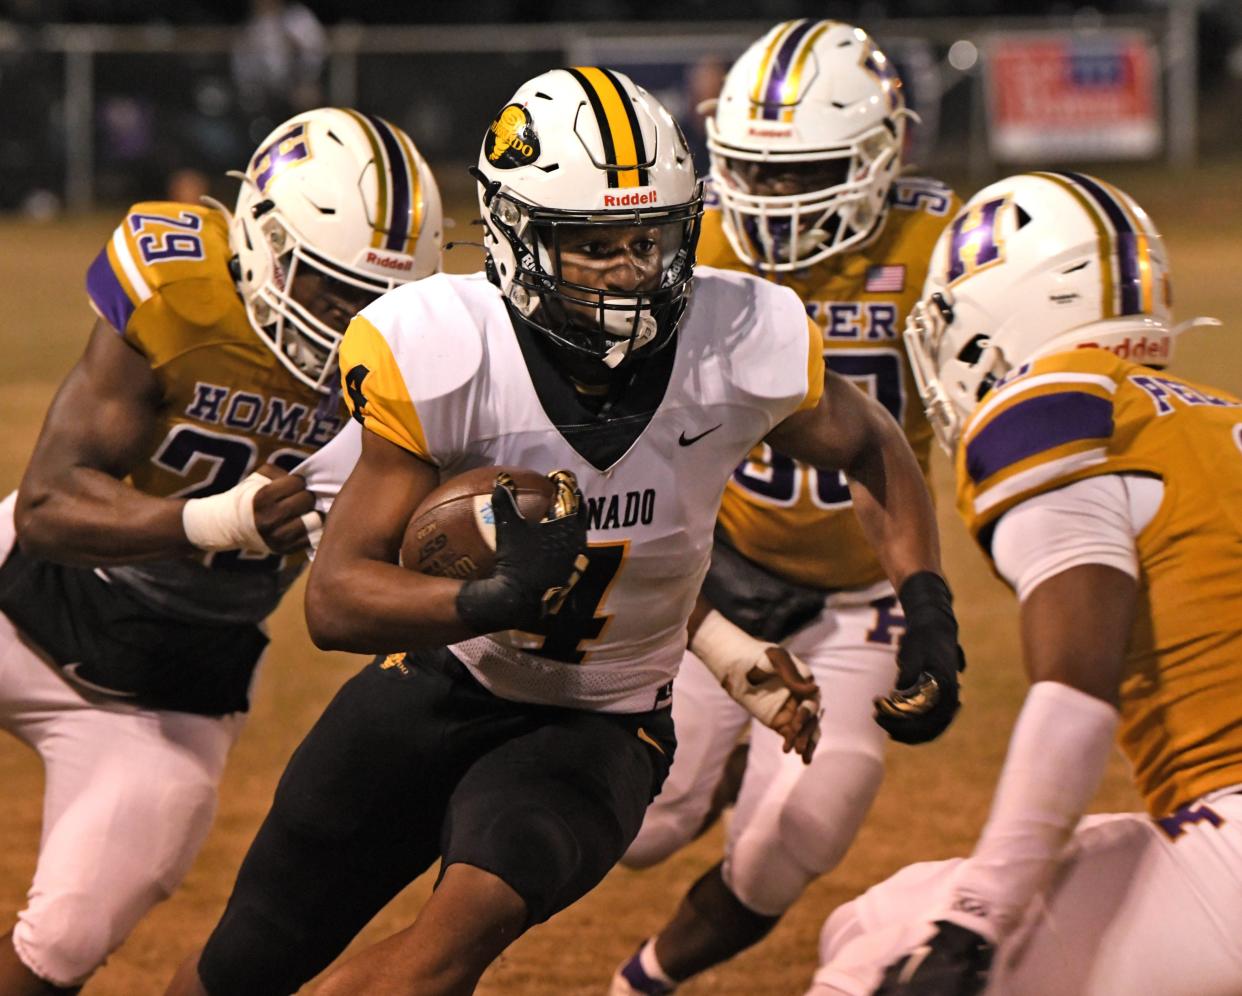 Haynesville's Alonzo Jackson runs against the Homer defense during Friday's Claiborne Parish Super Bowl in Homer.